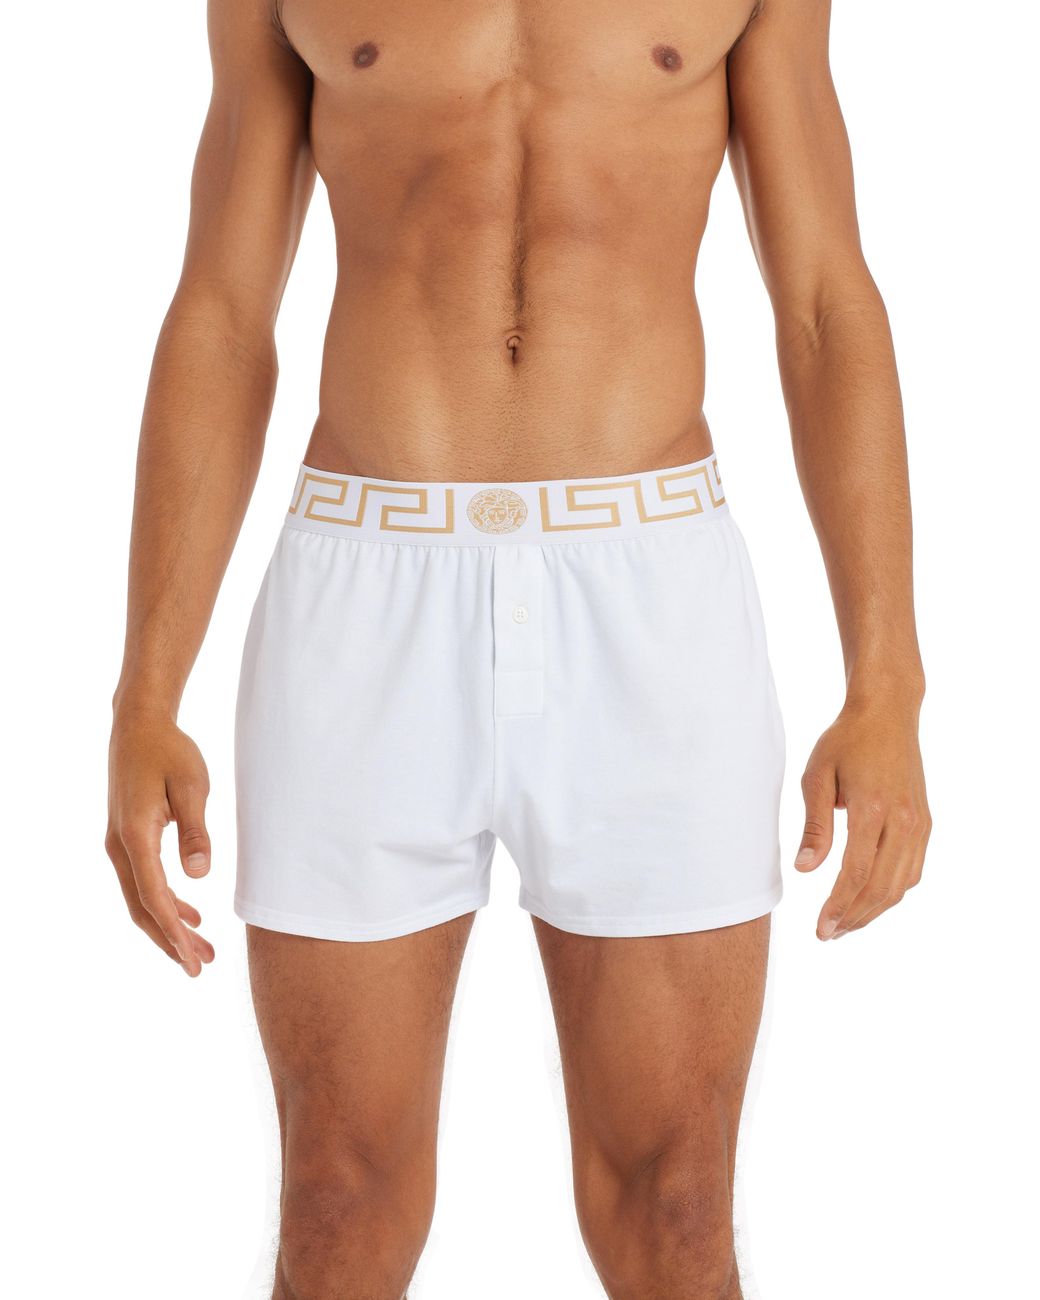 Versace Cotton Greca Border Boxers in White for Men - Lyst